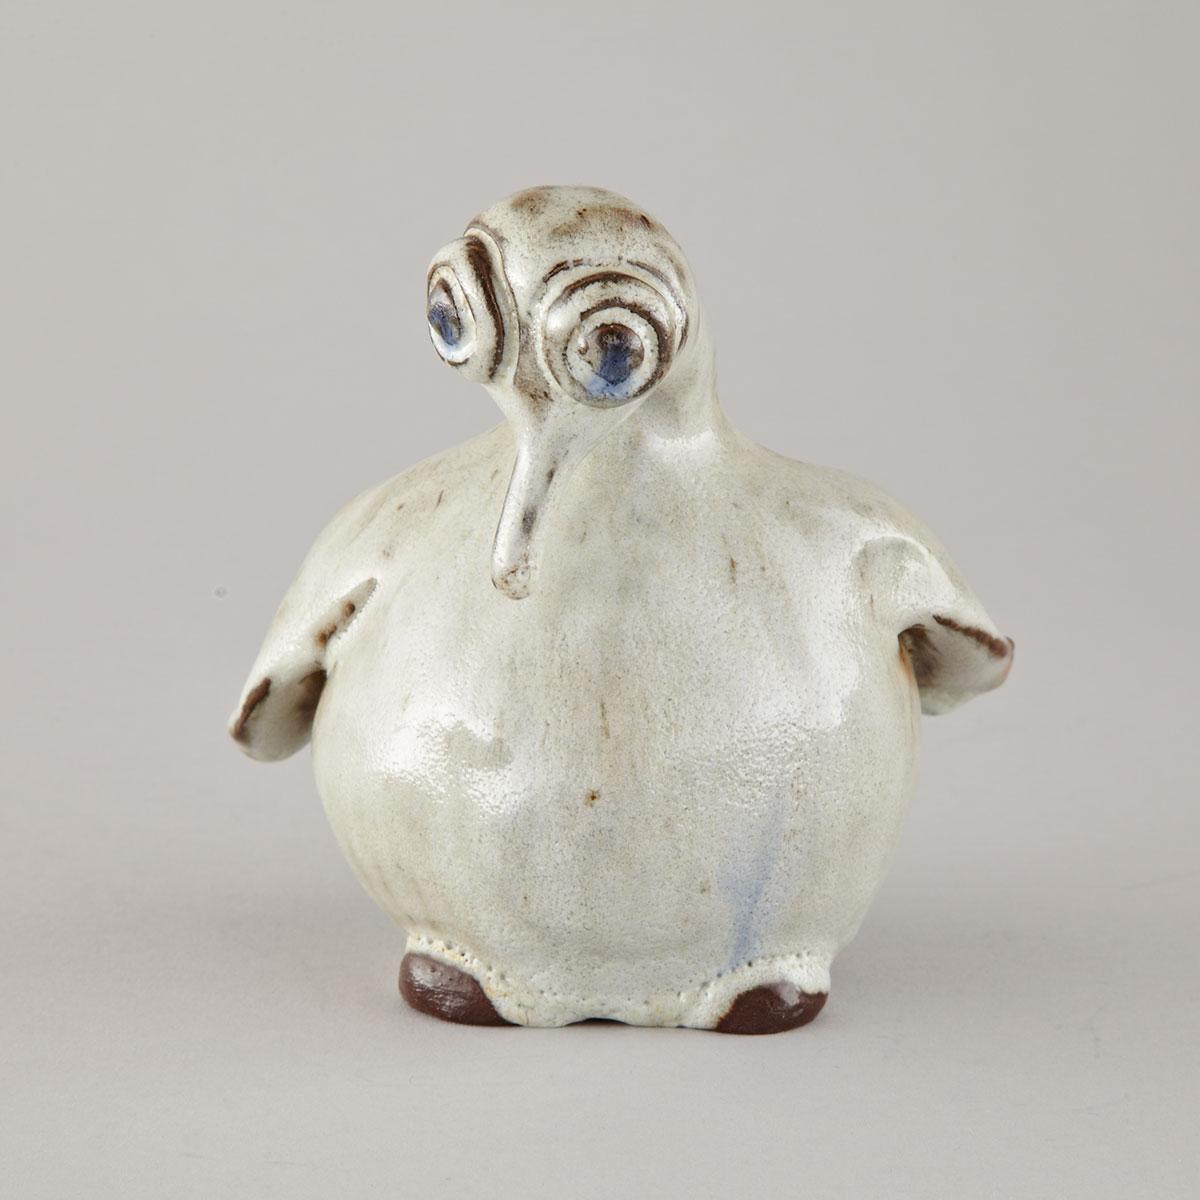 Deichmann Pottery ‘Goofus’, Kjeld & Erica Deichmann, dated 1942